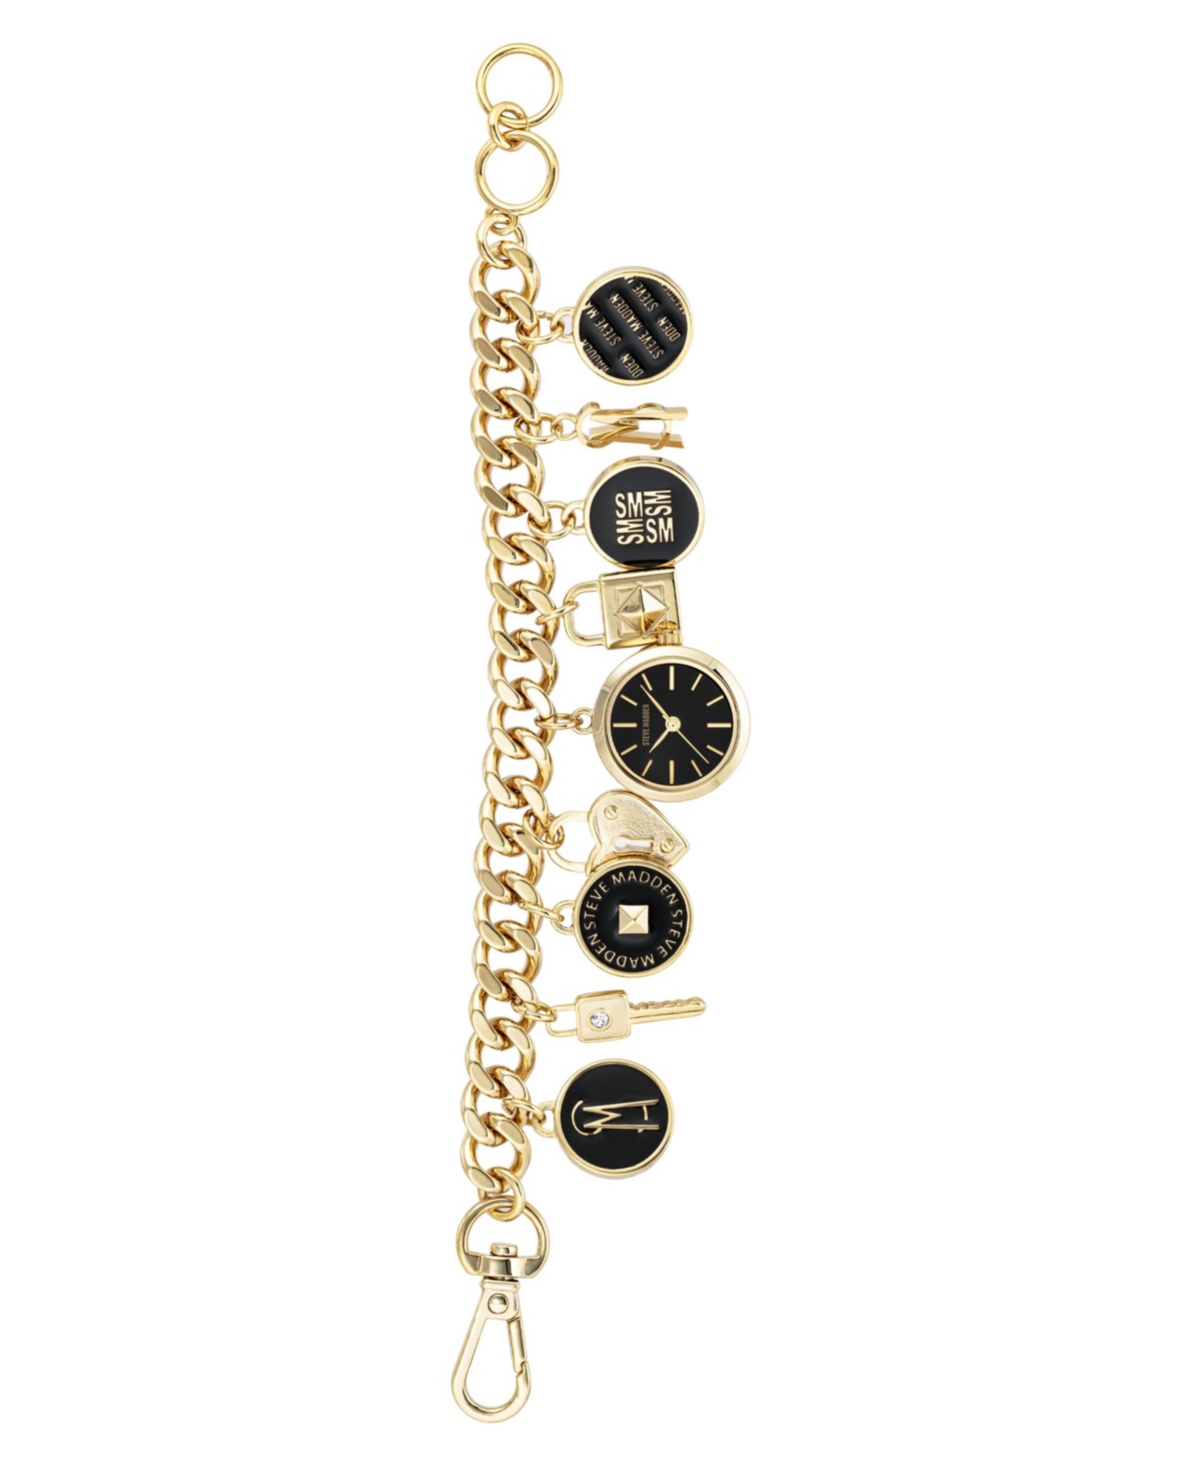 Women's Gold-Tone Polished Metal Charm Bracelet Watch, 22mm - Gold-Tone, Black